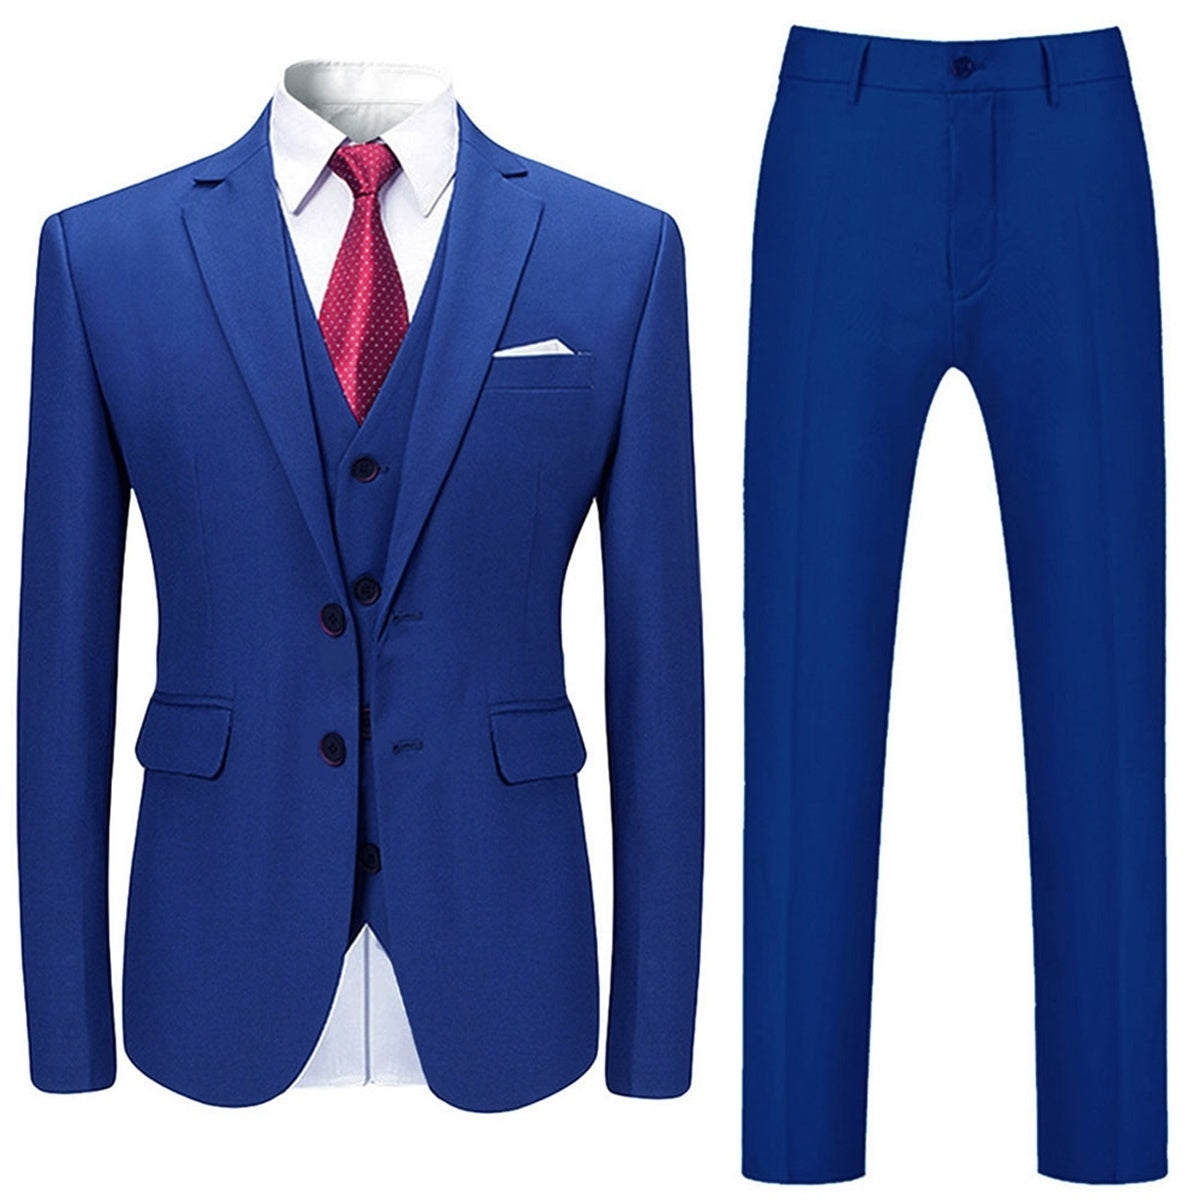 3 Pieces Men Suit Solid Color Business Suit Set Slim Fit Fashion Two Buttons Suits For Wedding Jacket and Vest and Pant